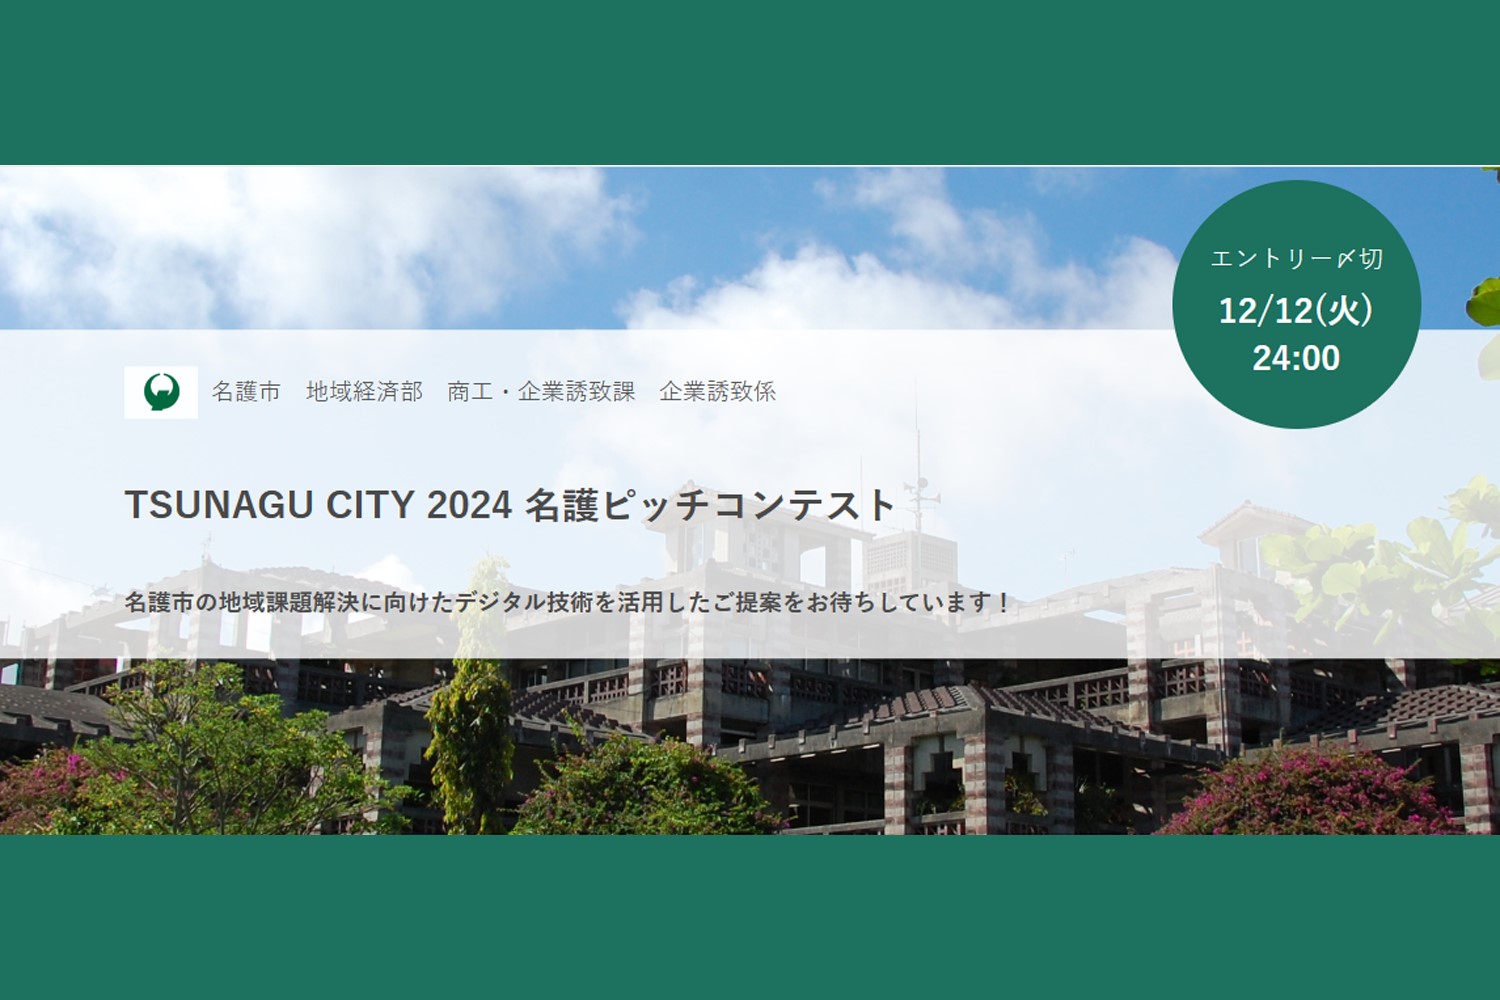 TSUNAGU CITY 2024名護ピッチコンテスト